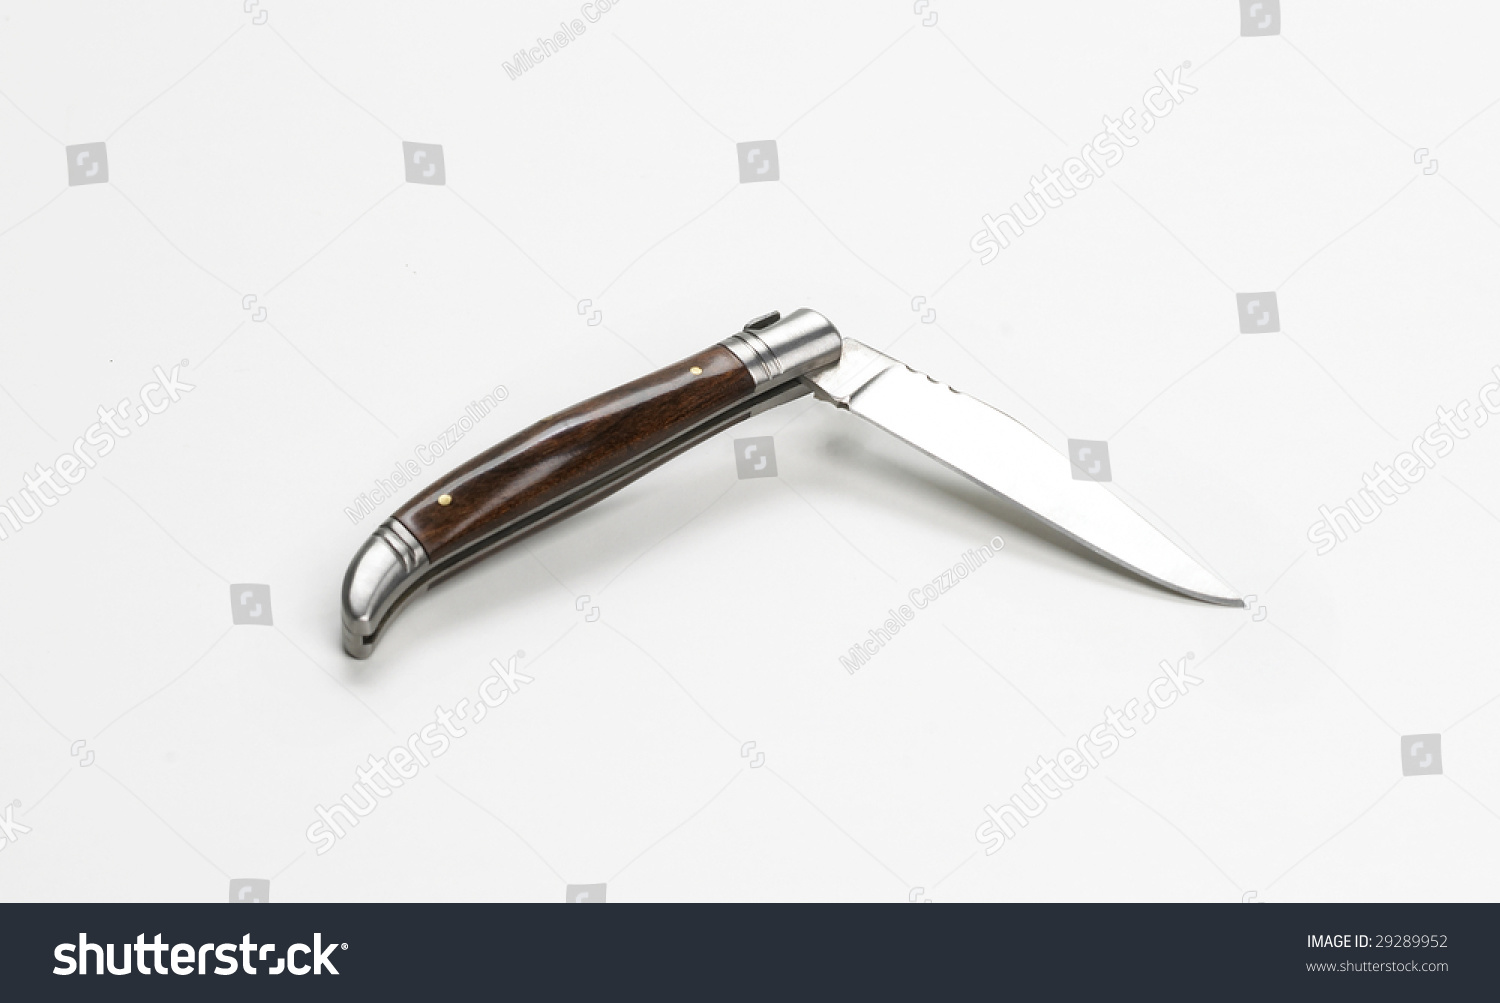 little knife